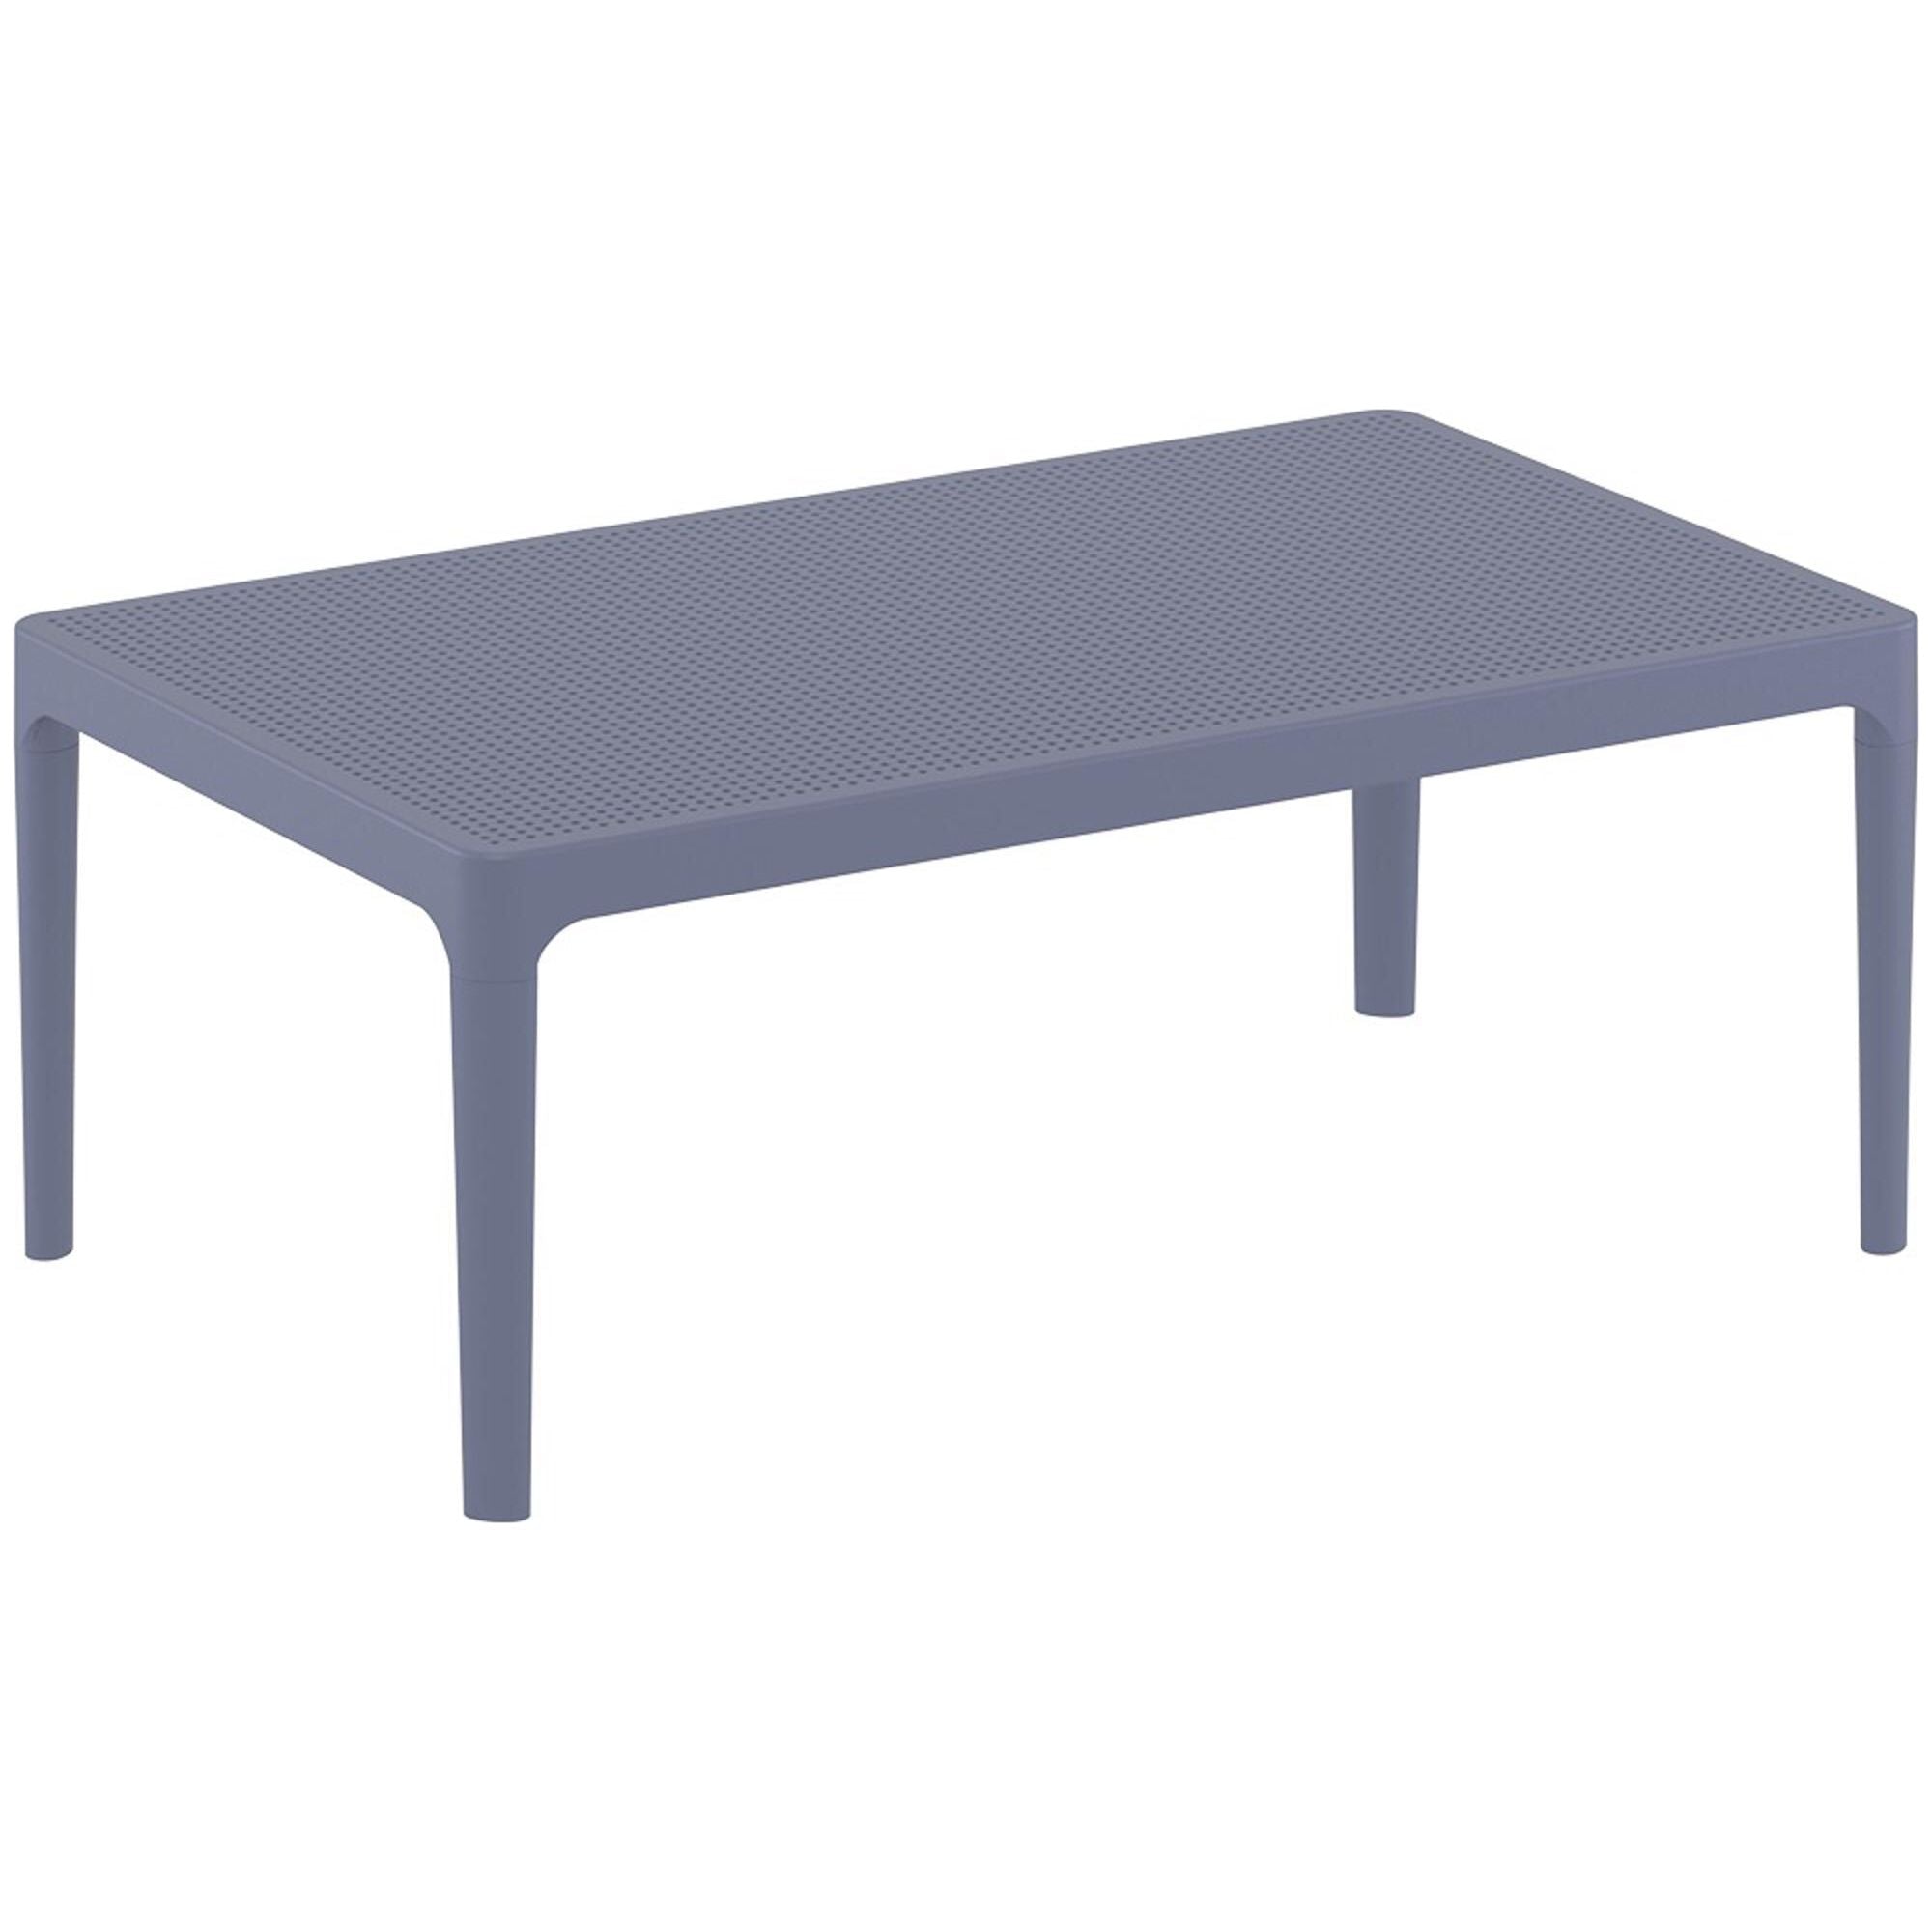 Garbar Sky coffee table indoors, outdoor 100x60 dark gray